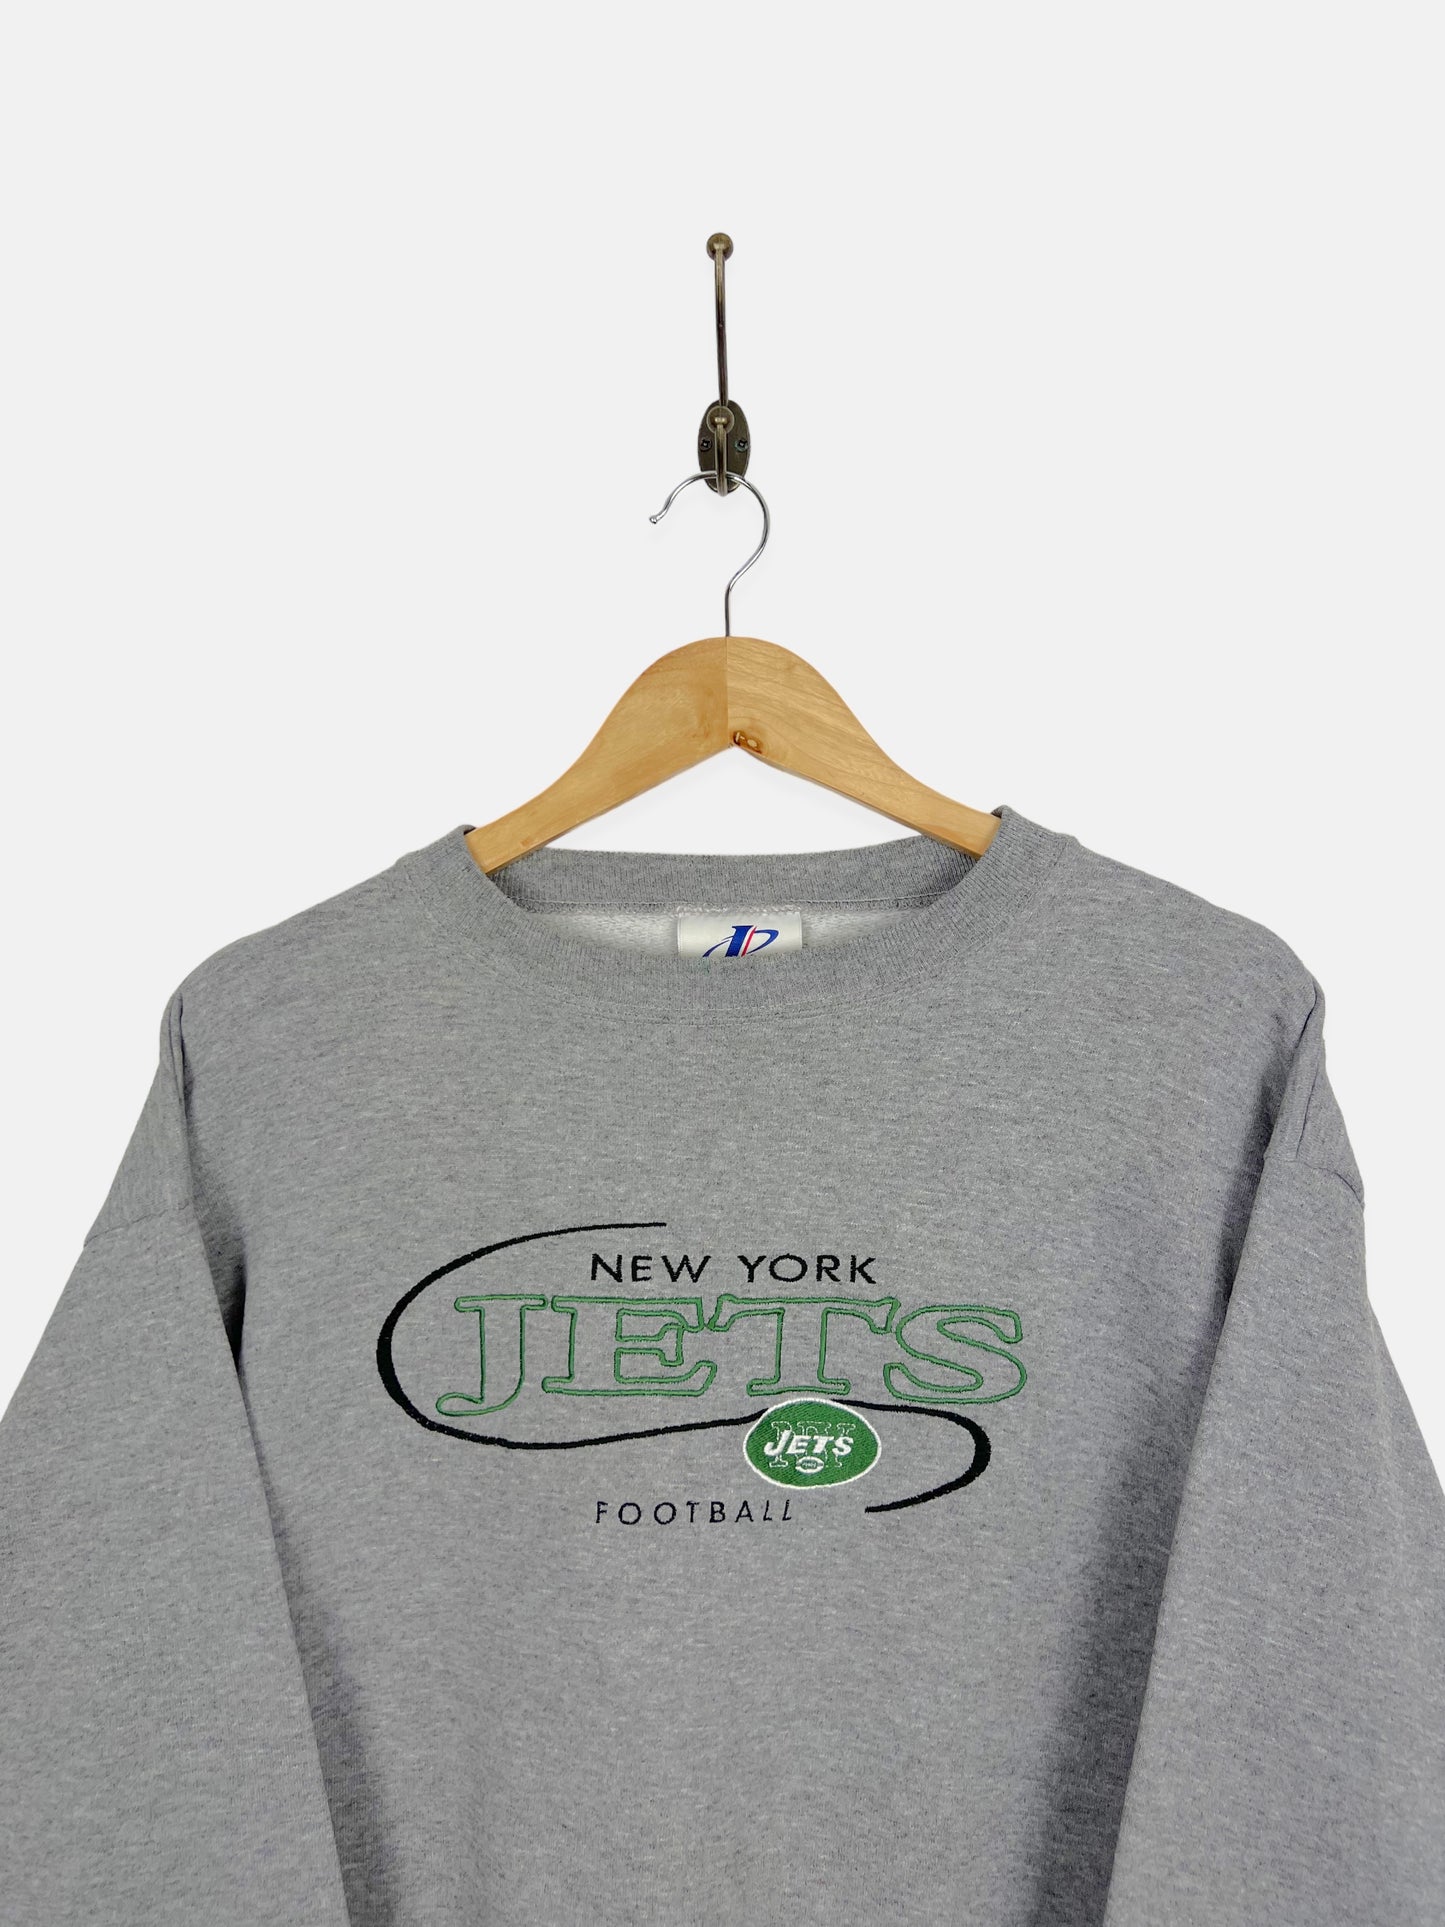 90's New York Jets NFL Embroidered Vintage Sweatshirt Size M